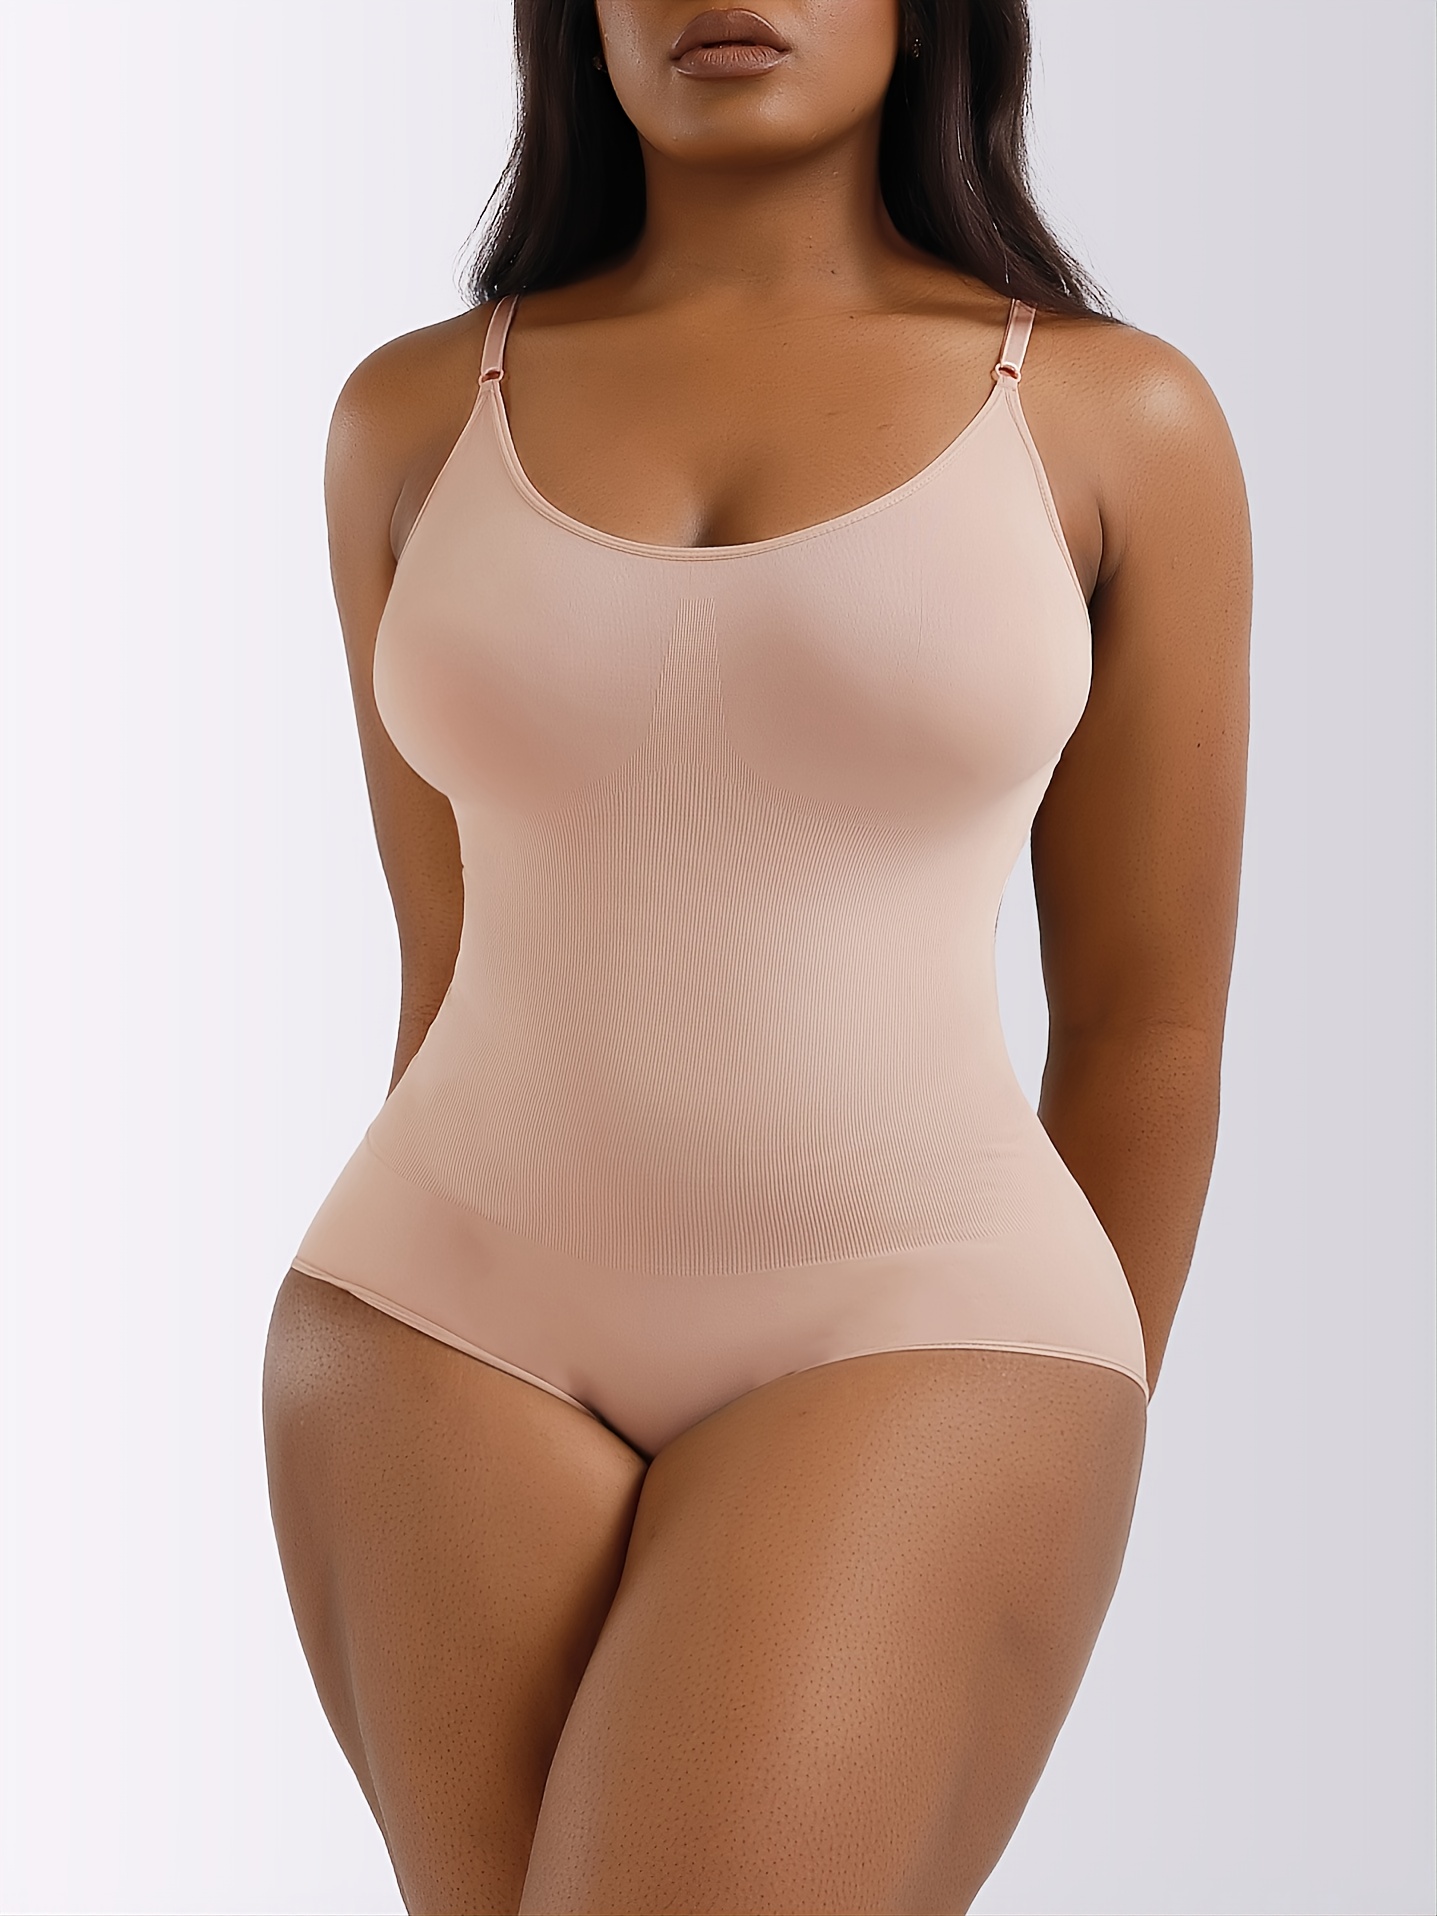 Girls Clothing - Women body shaper plus size bra cami tank top